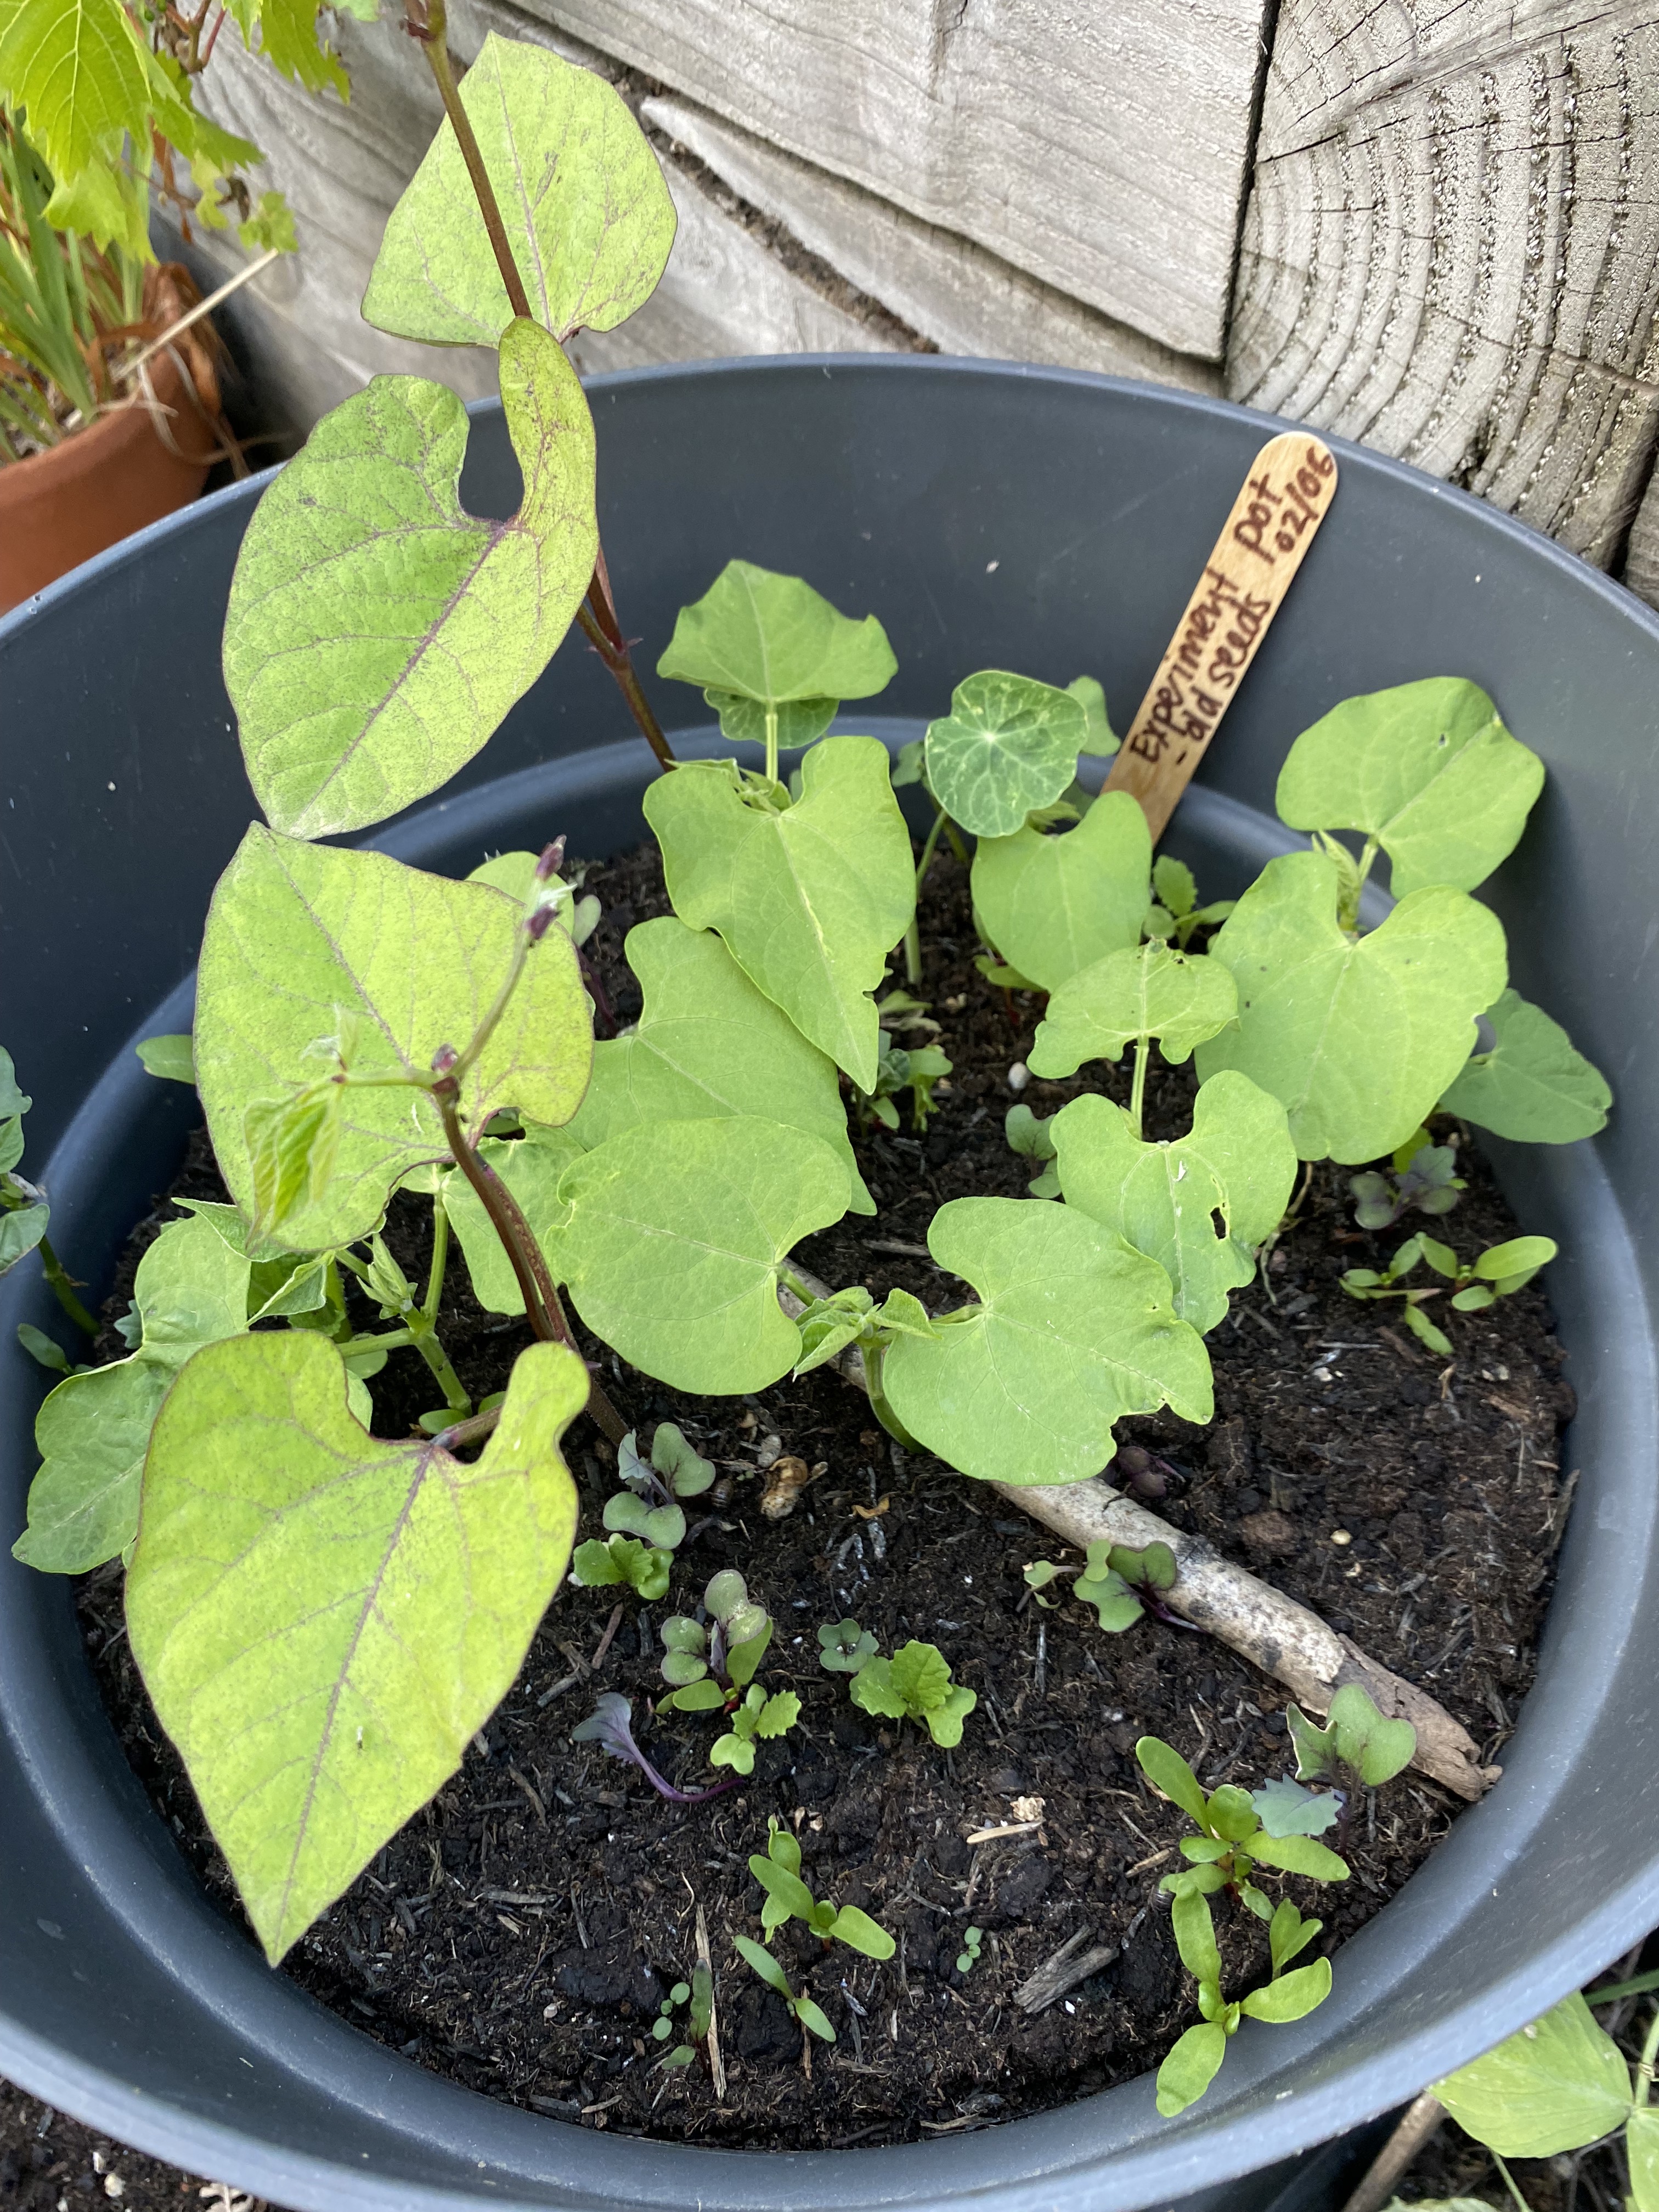 Grey pot with seedlings growing in it